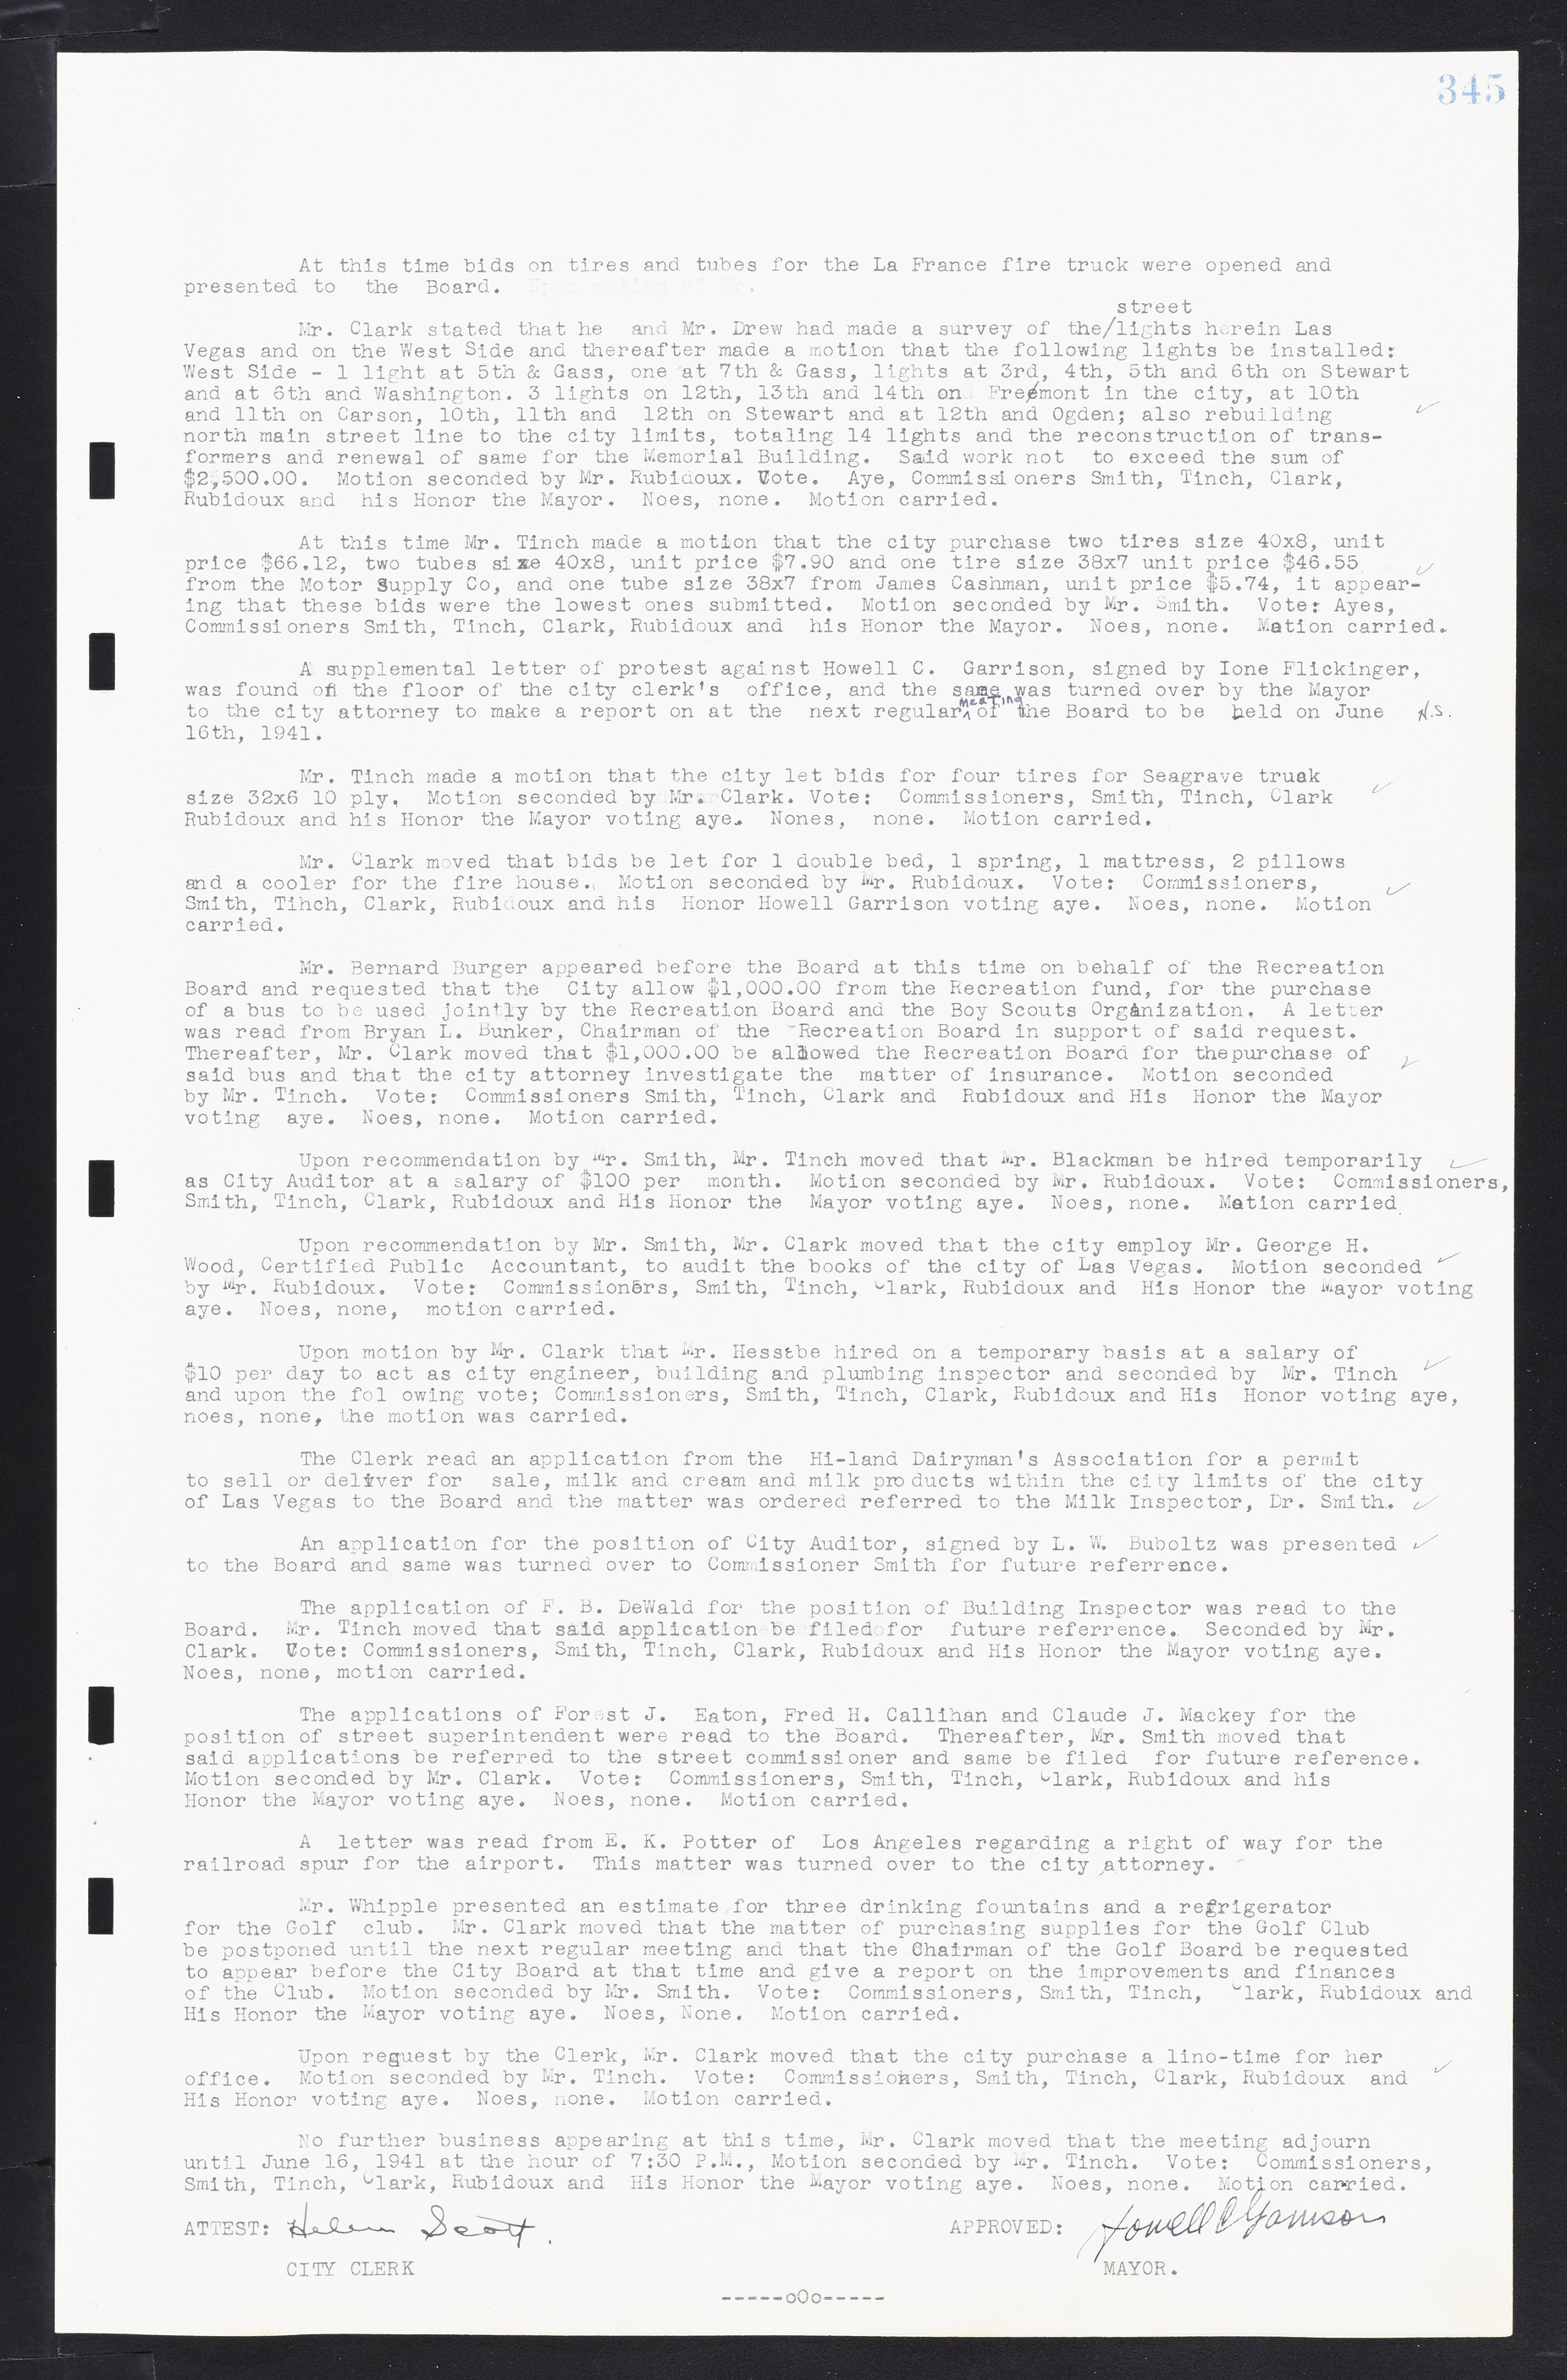 Las Vegas City Commission Minutes, February 17, 1937 to August 4, 1942, lvc000004-369